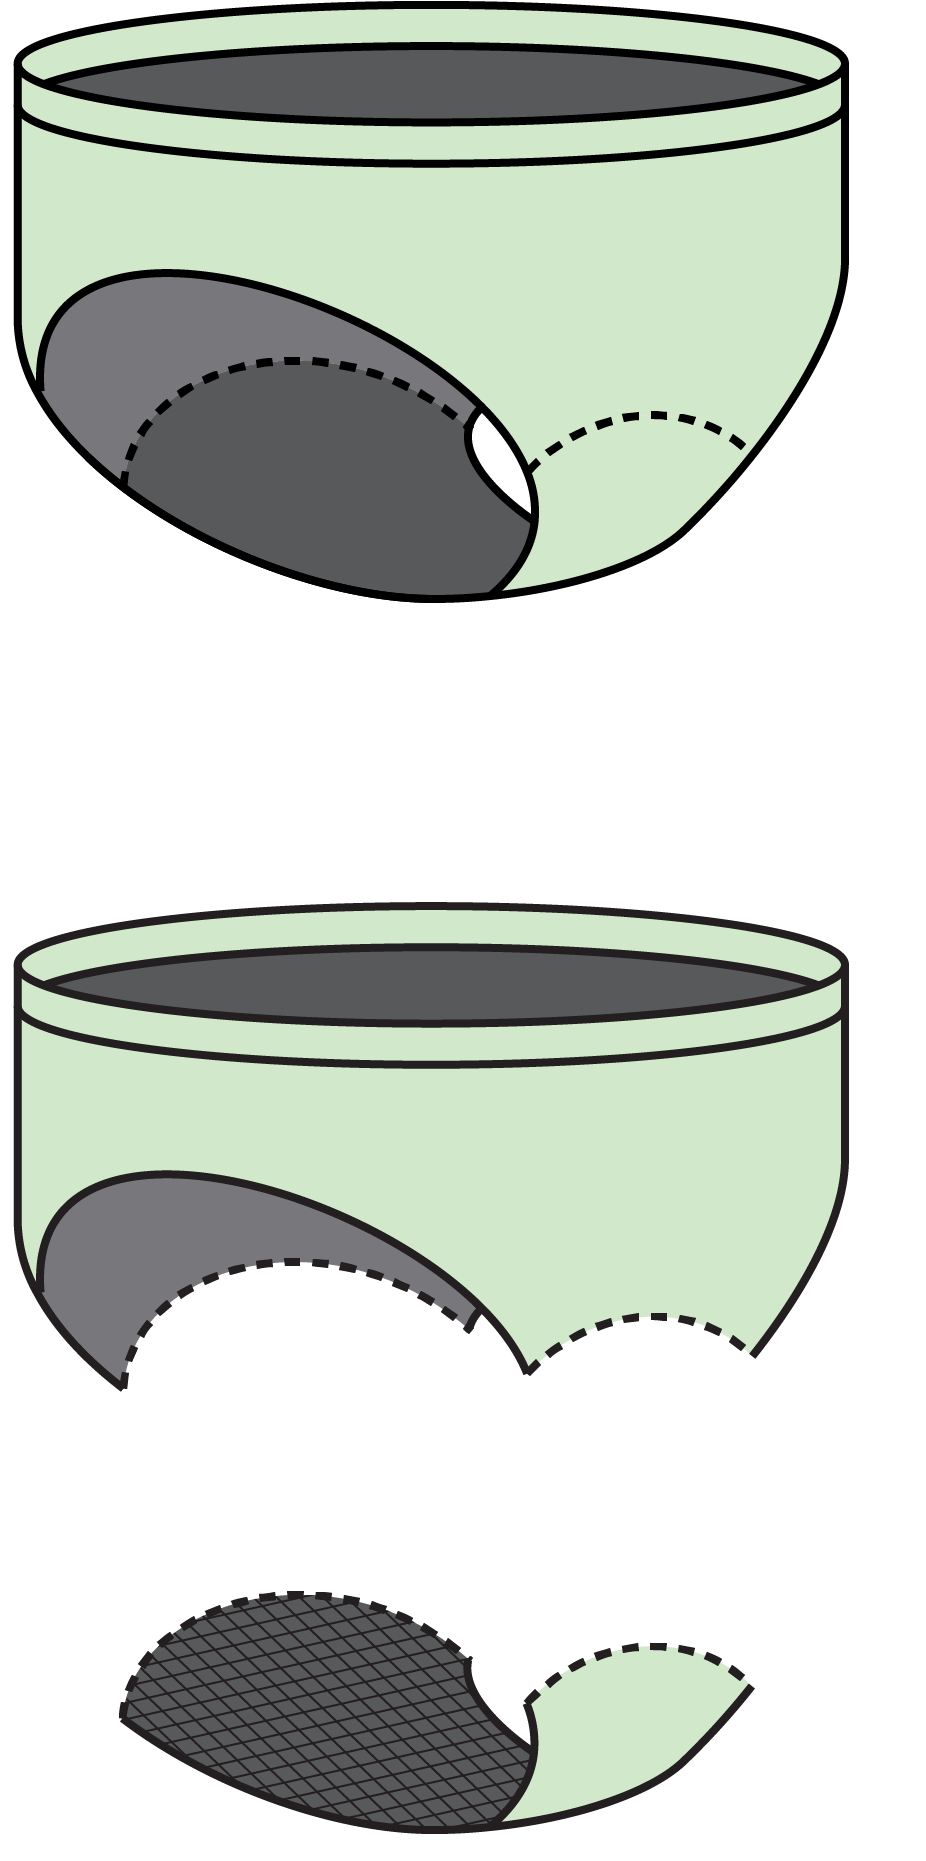 Underwear layers illustration